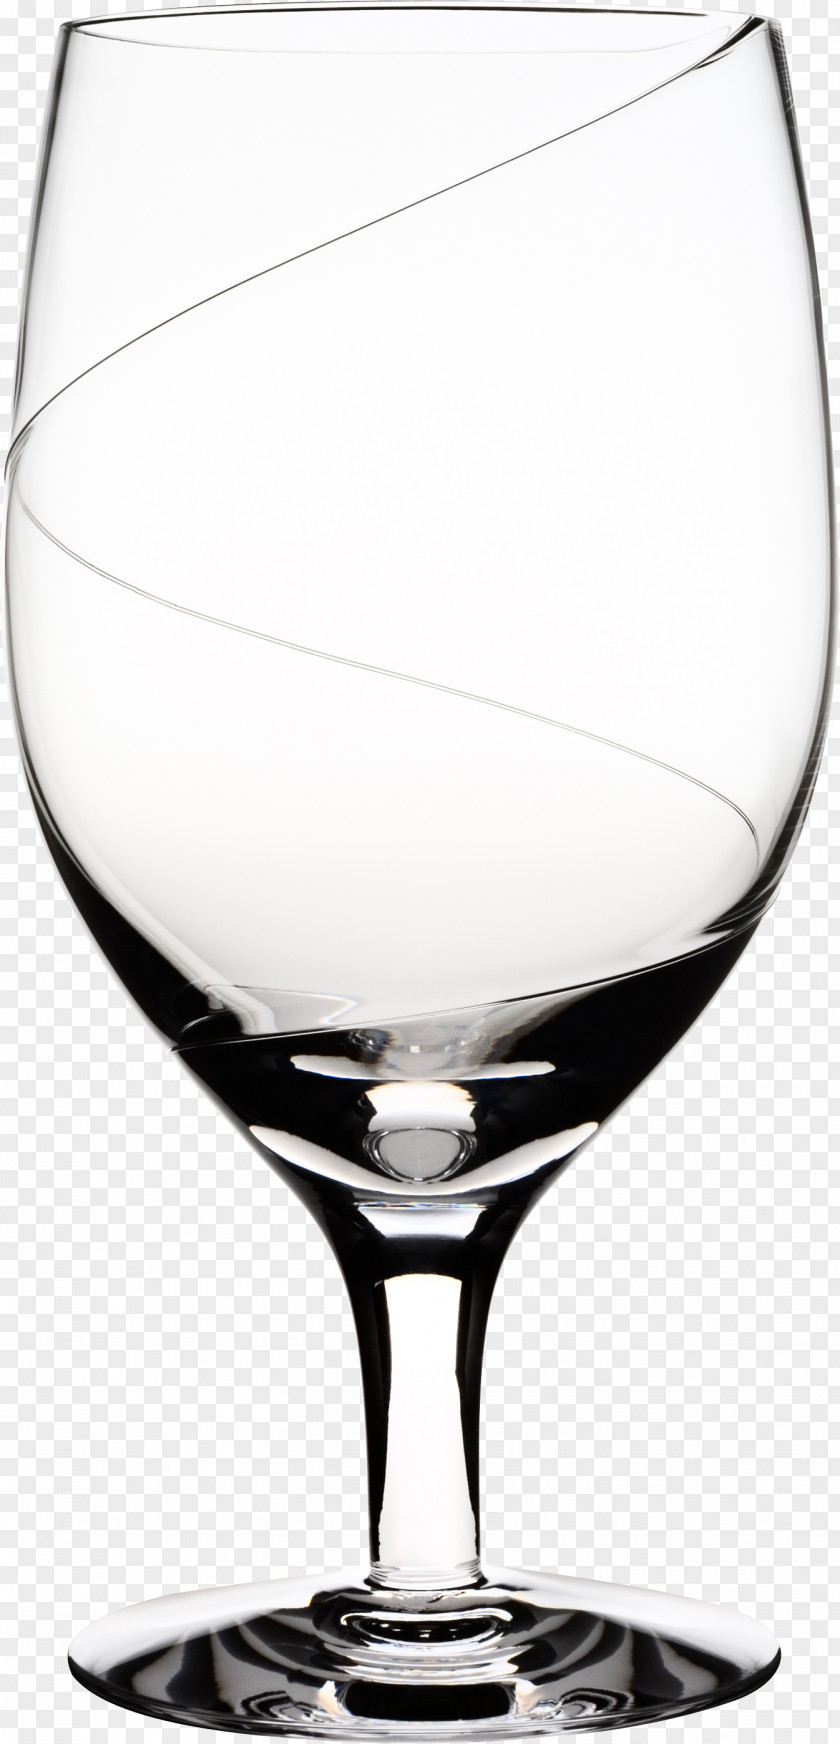 Empty Wine Glass Image Kingdom Of Crystal Kosta, Sweden Orrefors Kosta Glasbruk PNG